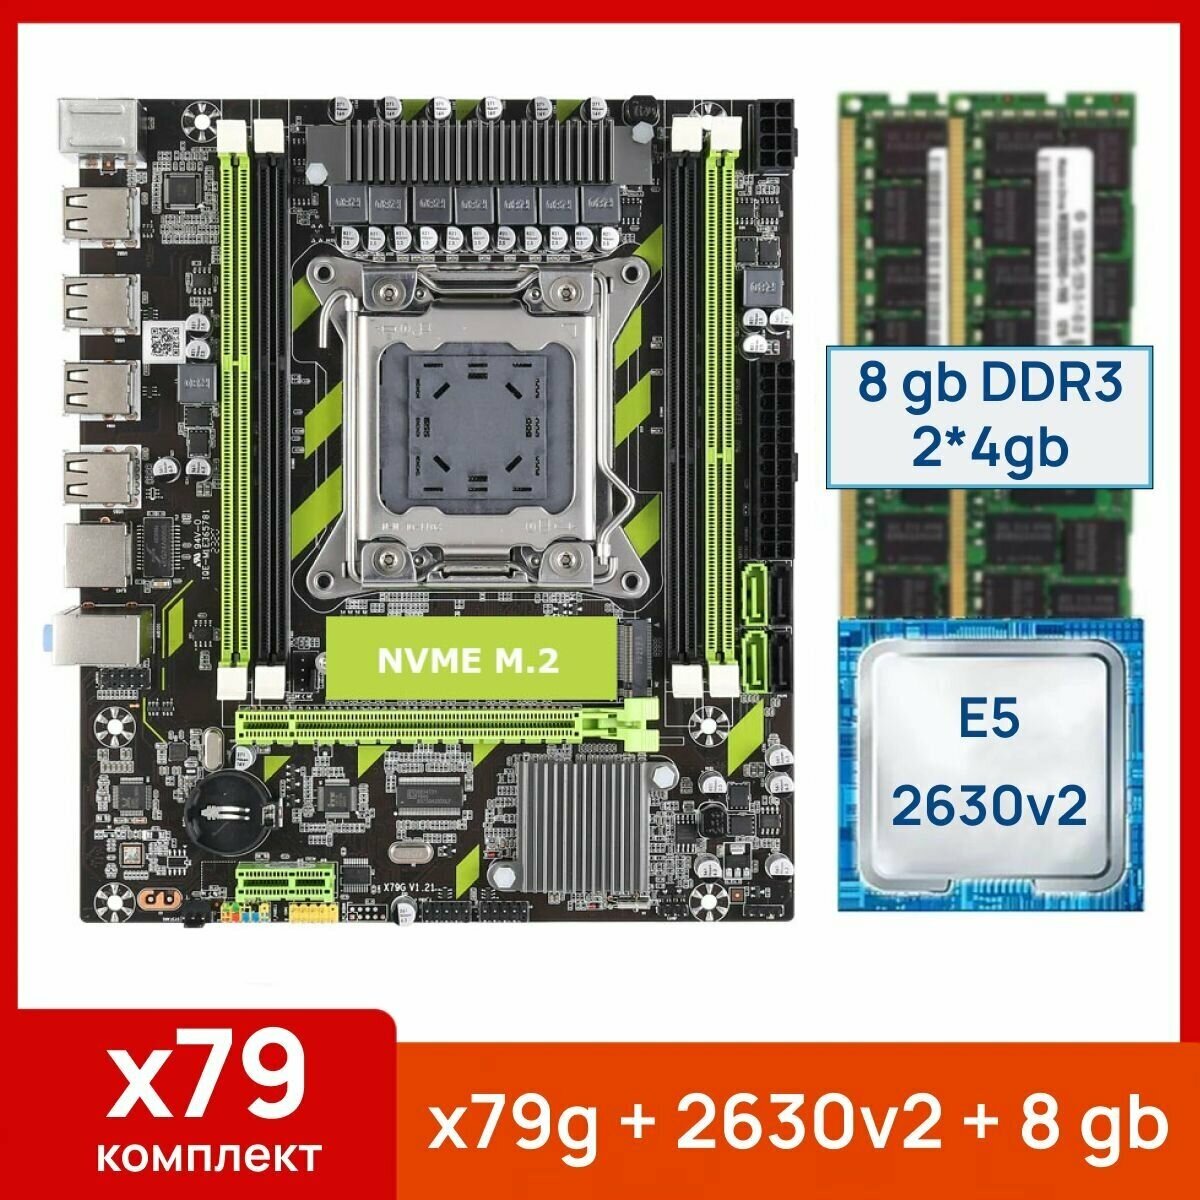 Комплект: Atermiter x79g + Xeon E5 2630v2 + 8 gb(2x4gb) DDR3 ecc reg